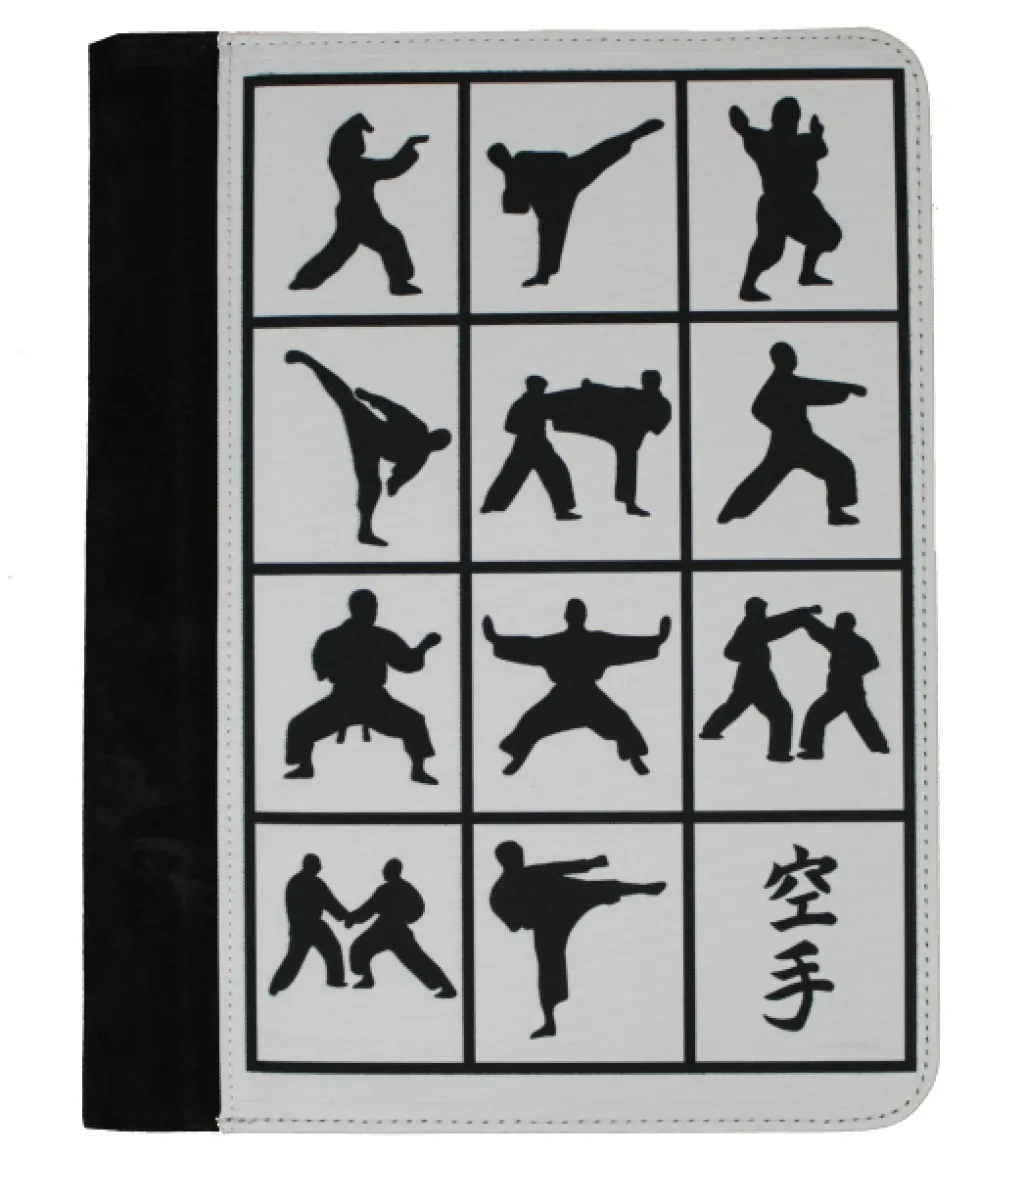 Writing pad with karate motifs